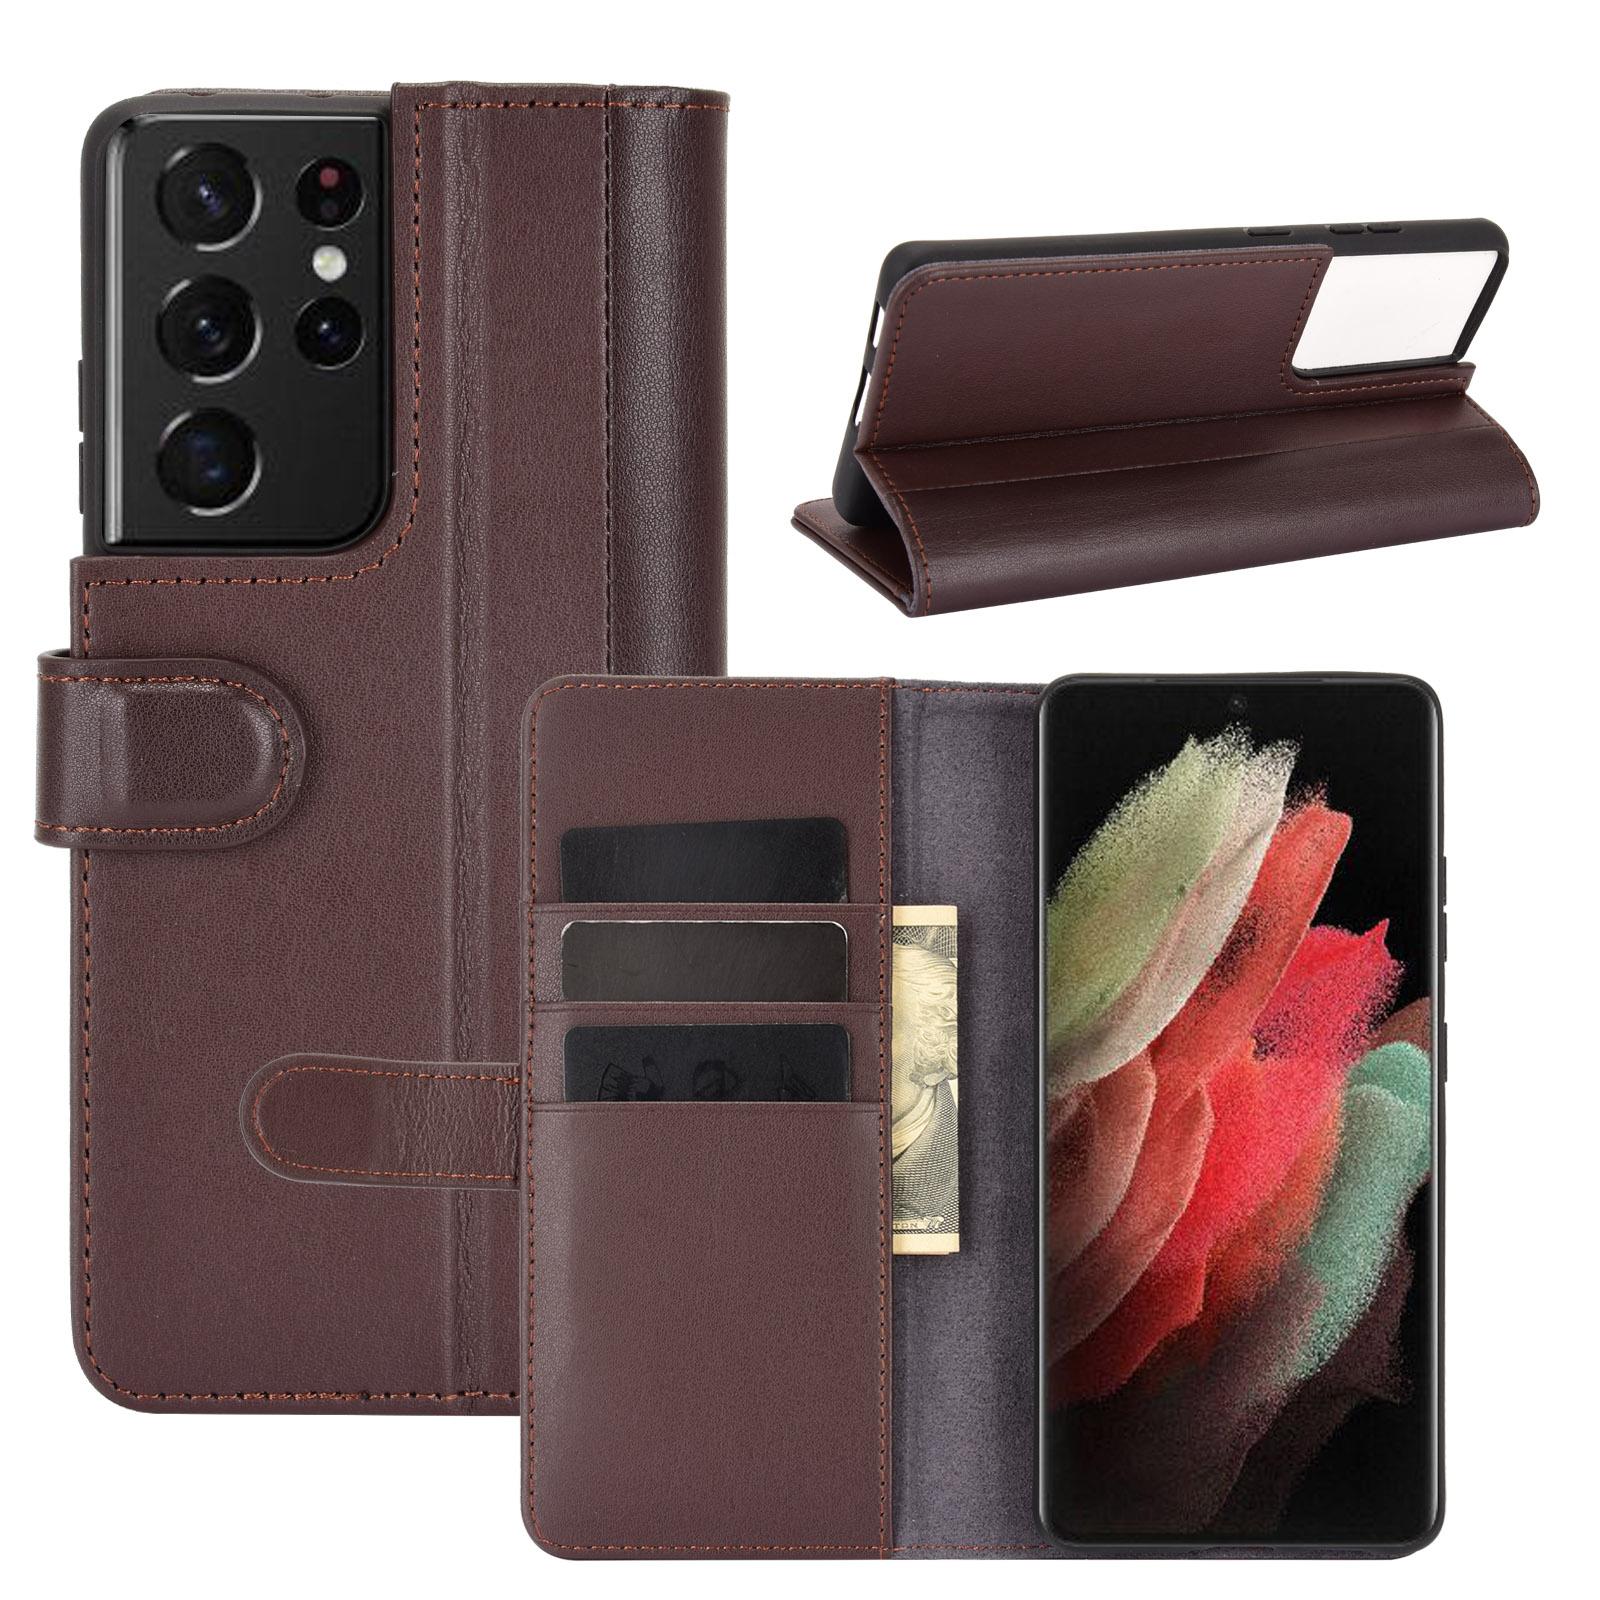 Samsung Galaxy S21 Ultra Genuine Leather Wallet Case Brown